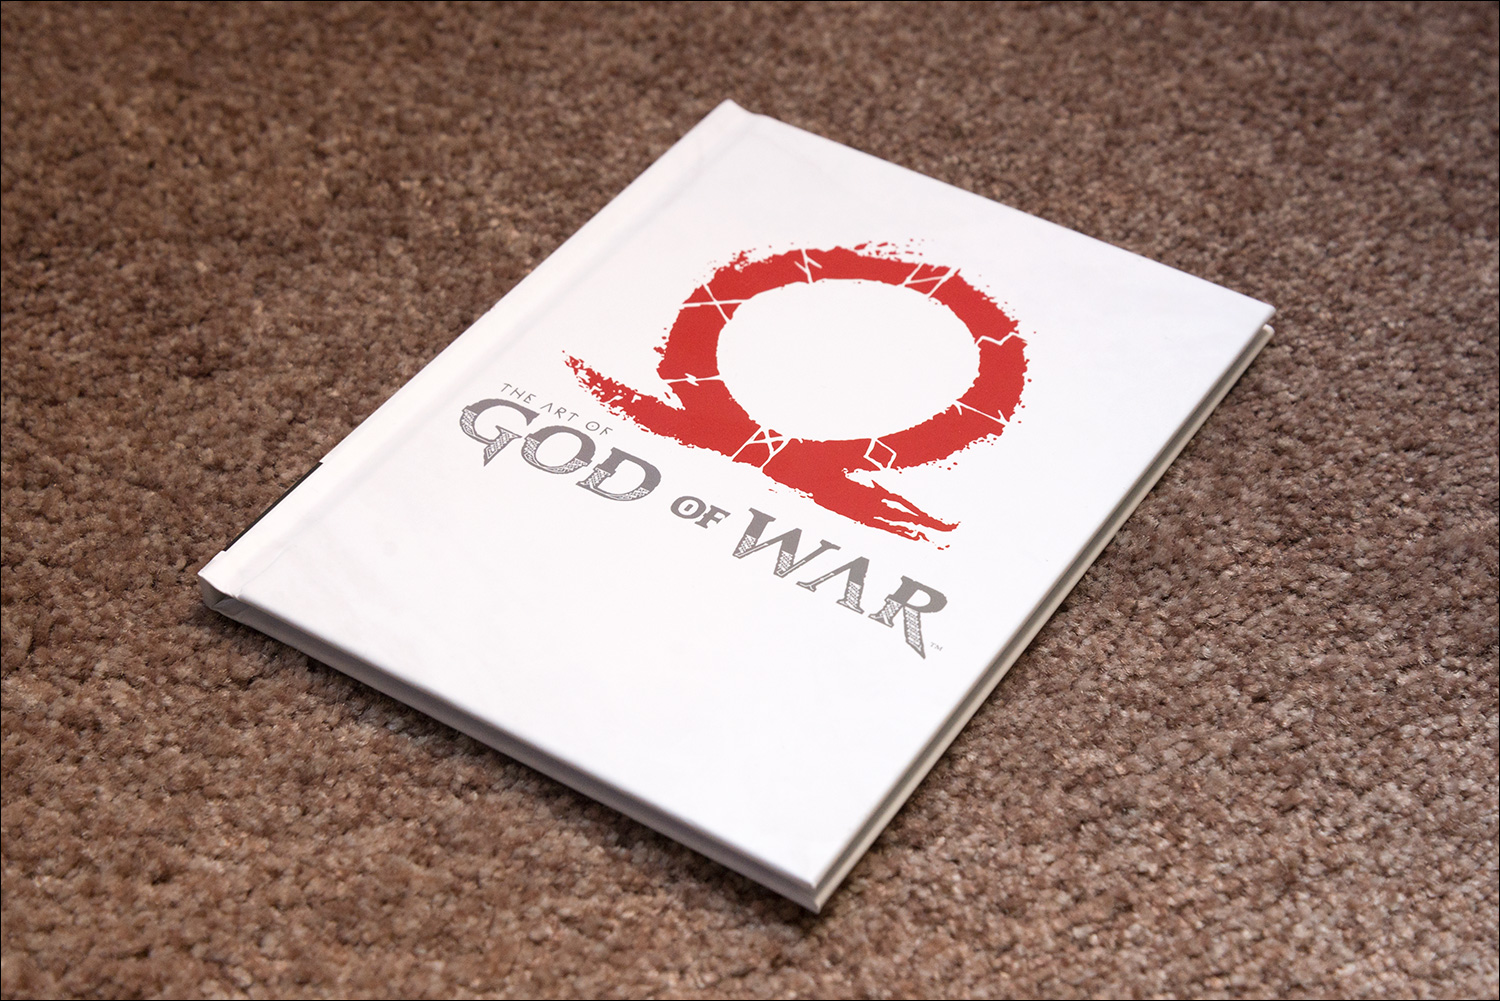 God-of-War-Limited-Edition-Artbook.jpg